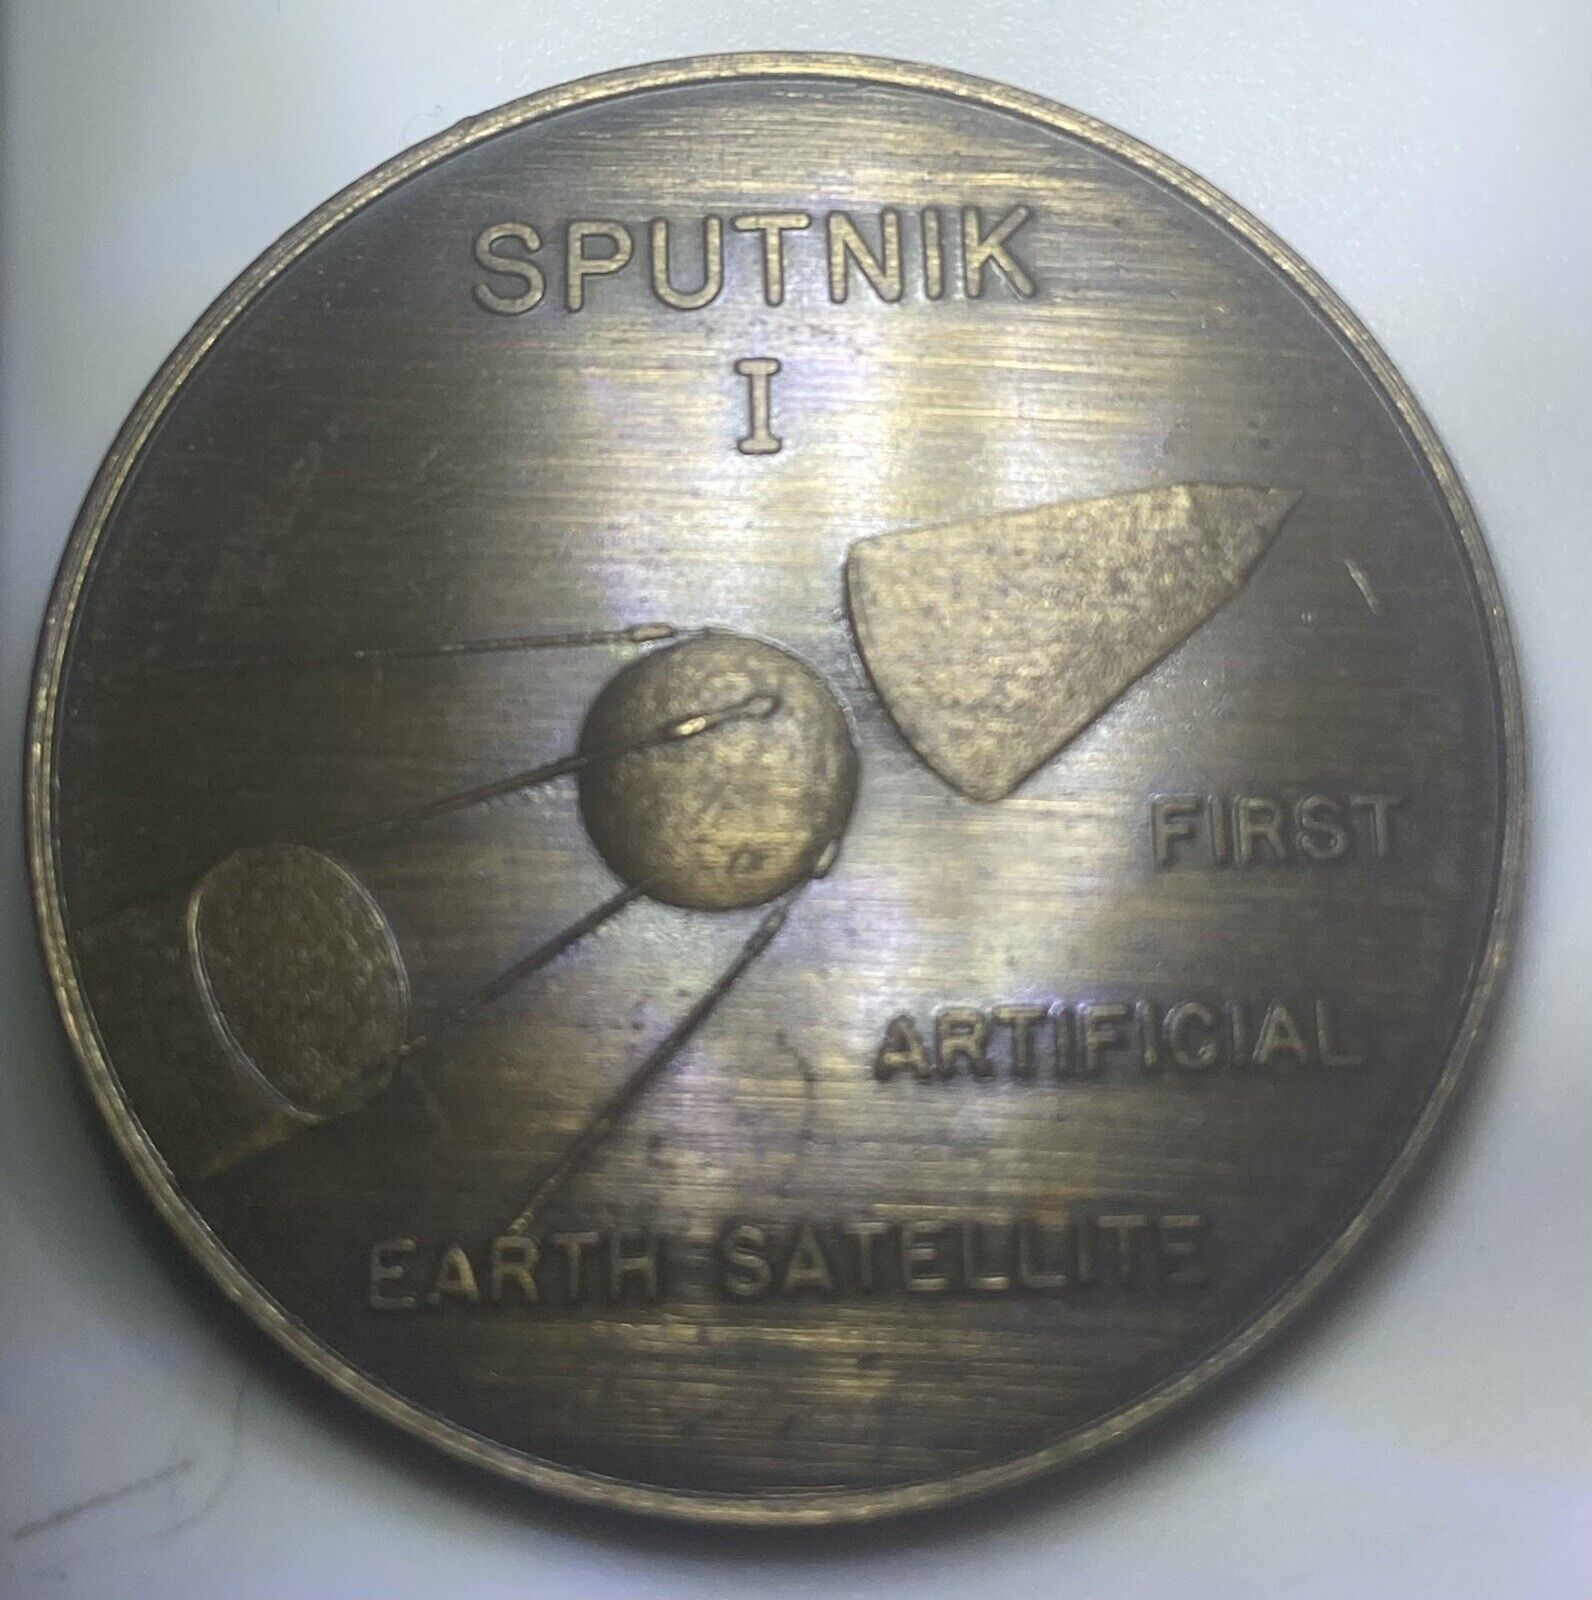 Vintage 1957 Sputnik I Commemorative Coin Rare